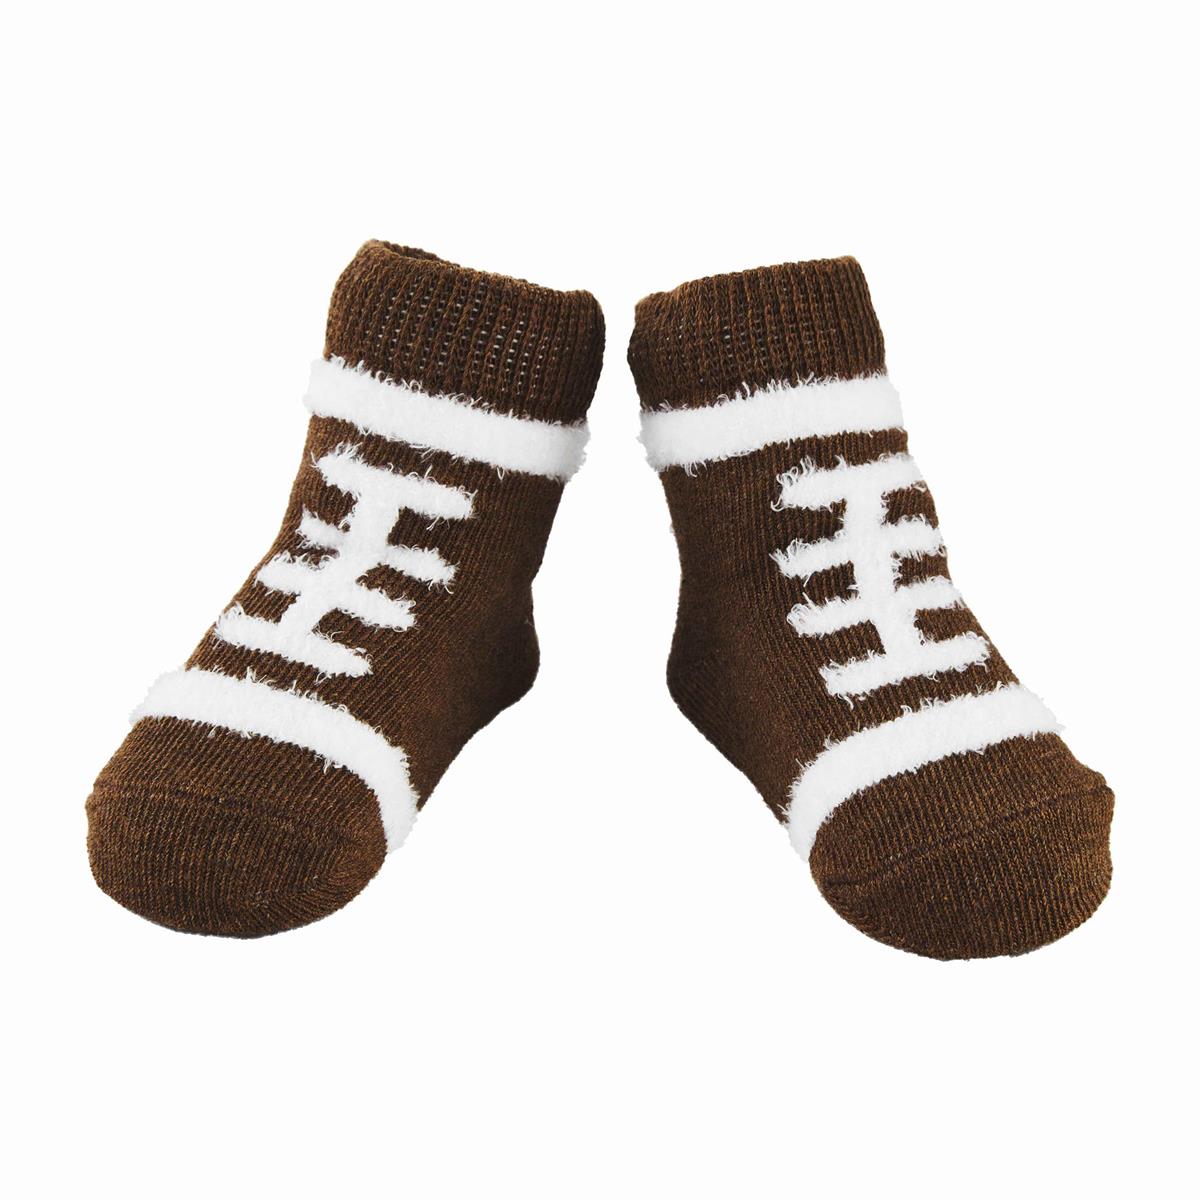 football chenille socks on a white background